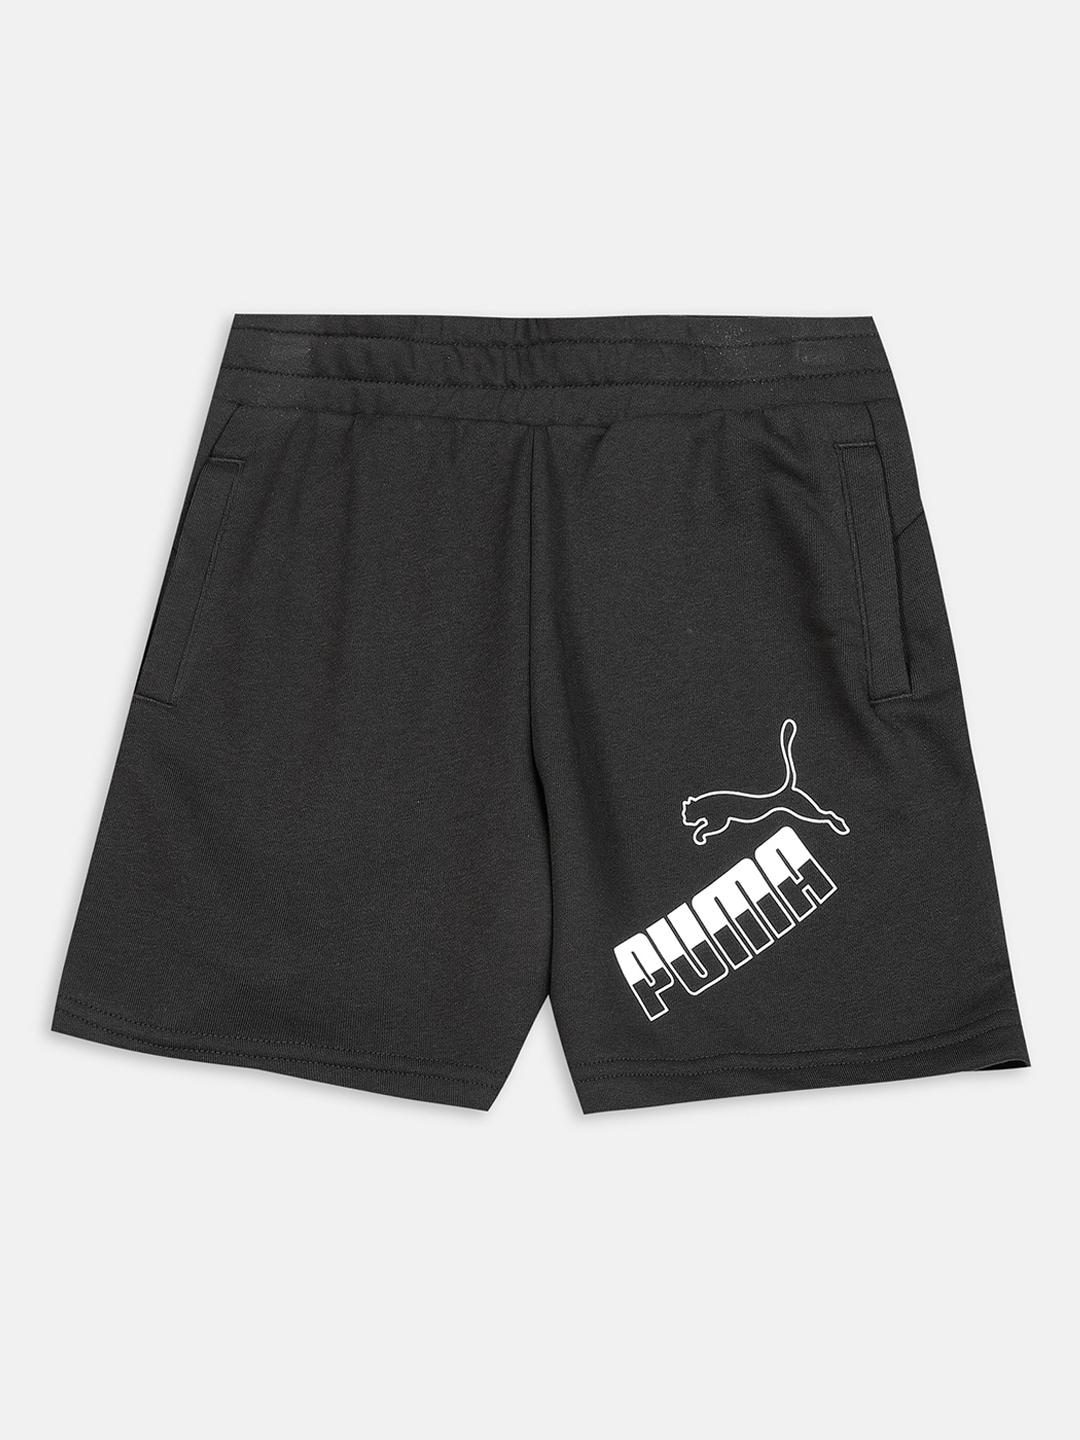 puma-boys-black-solid-cotton-amplified-big-logo-youth-shorts